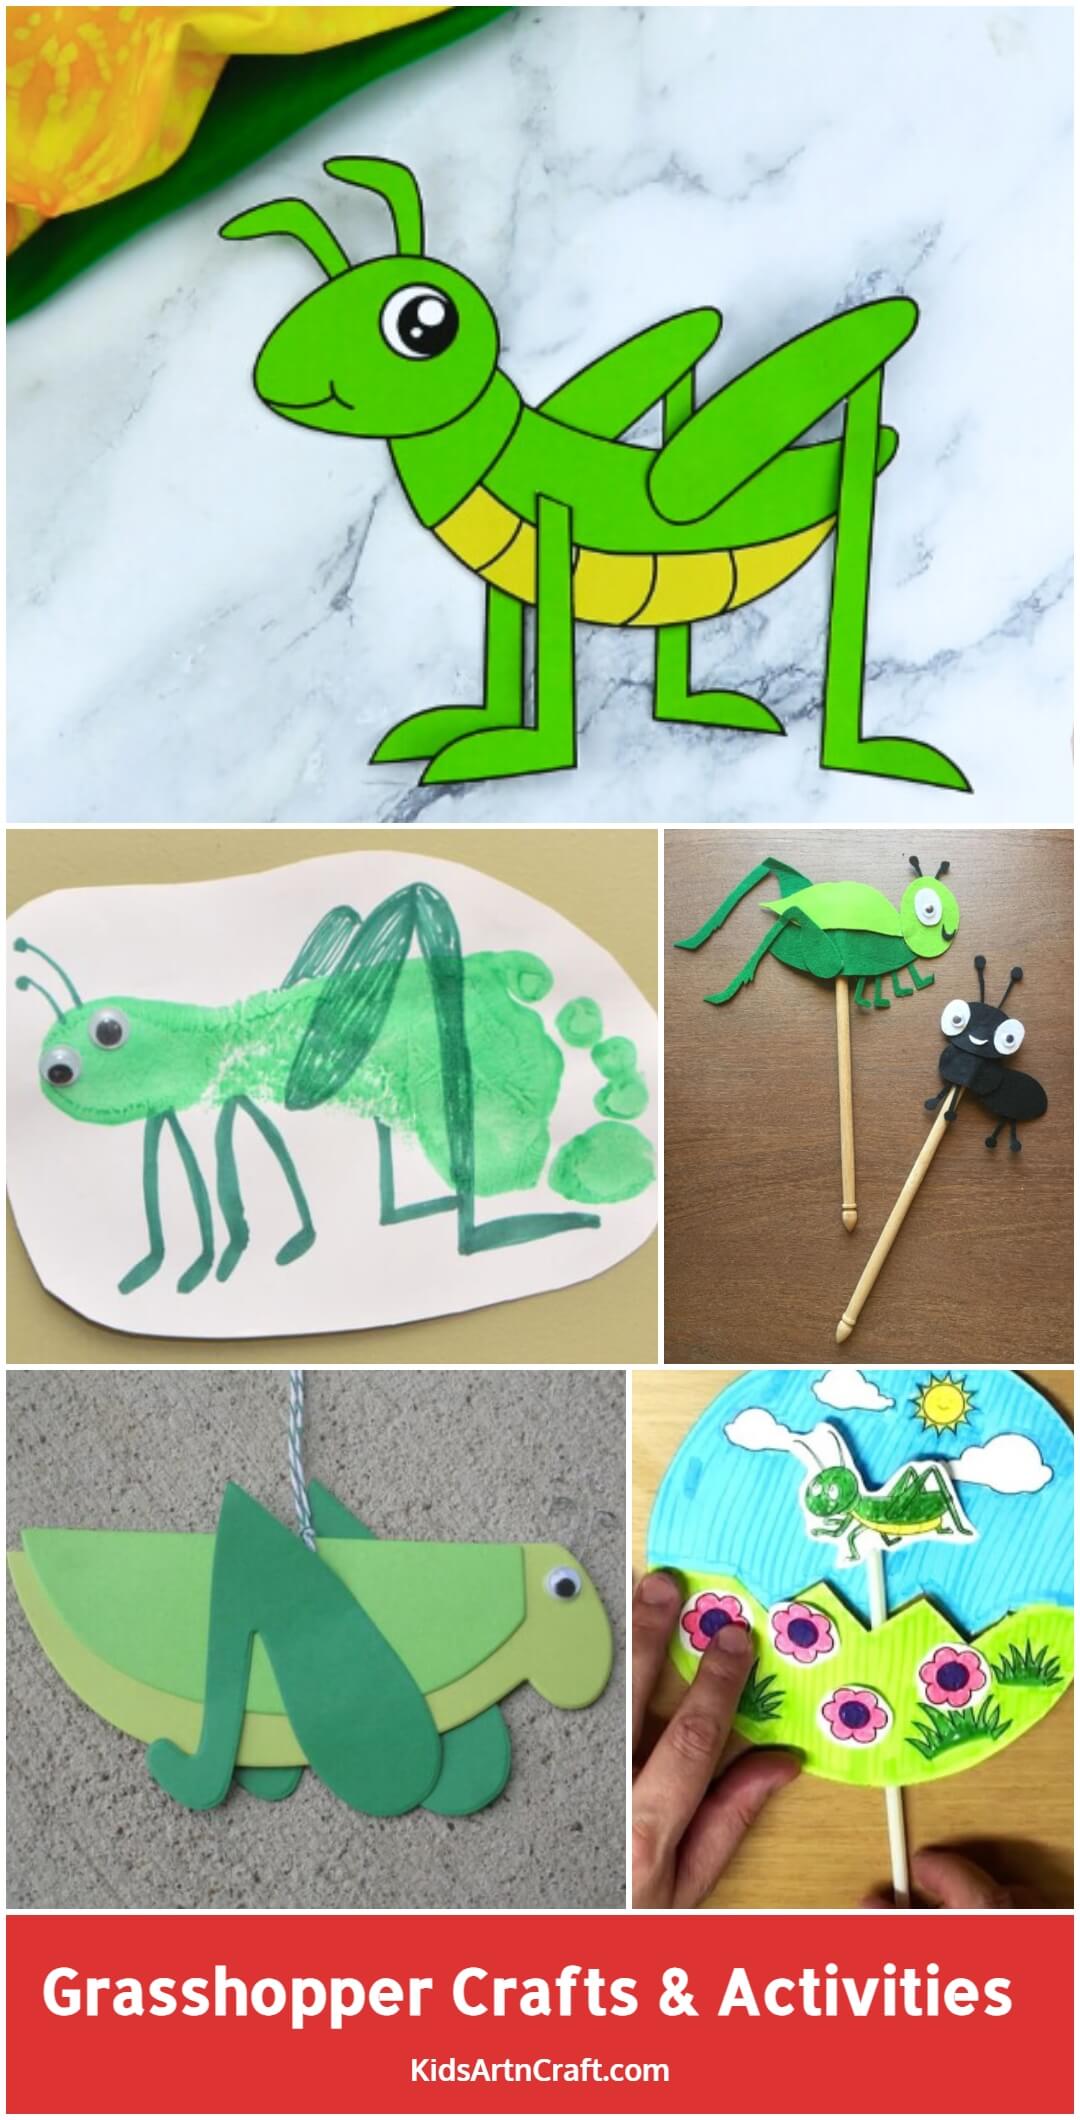 Grasshopper Crafts & Activities for Kids